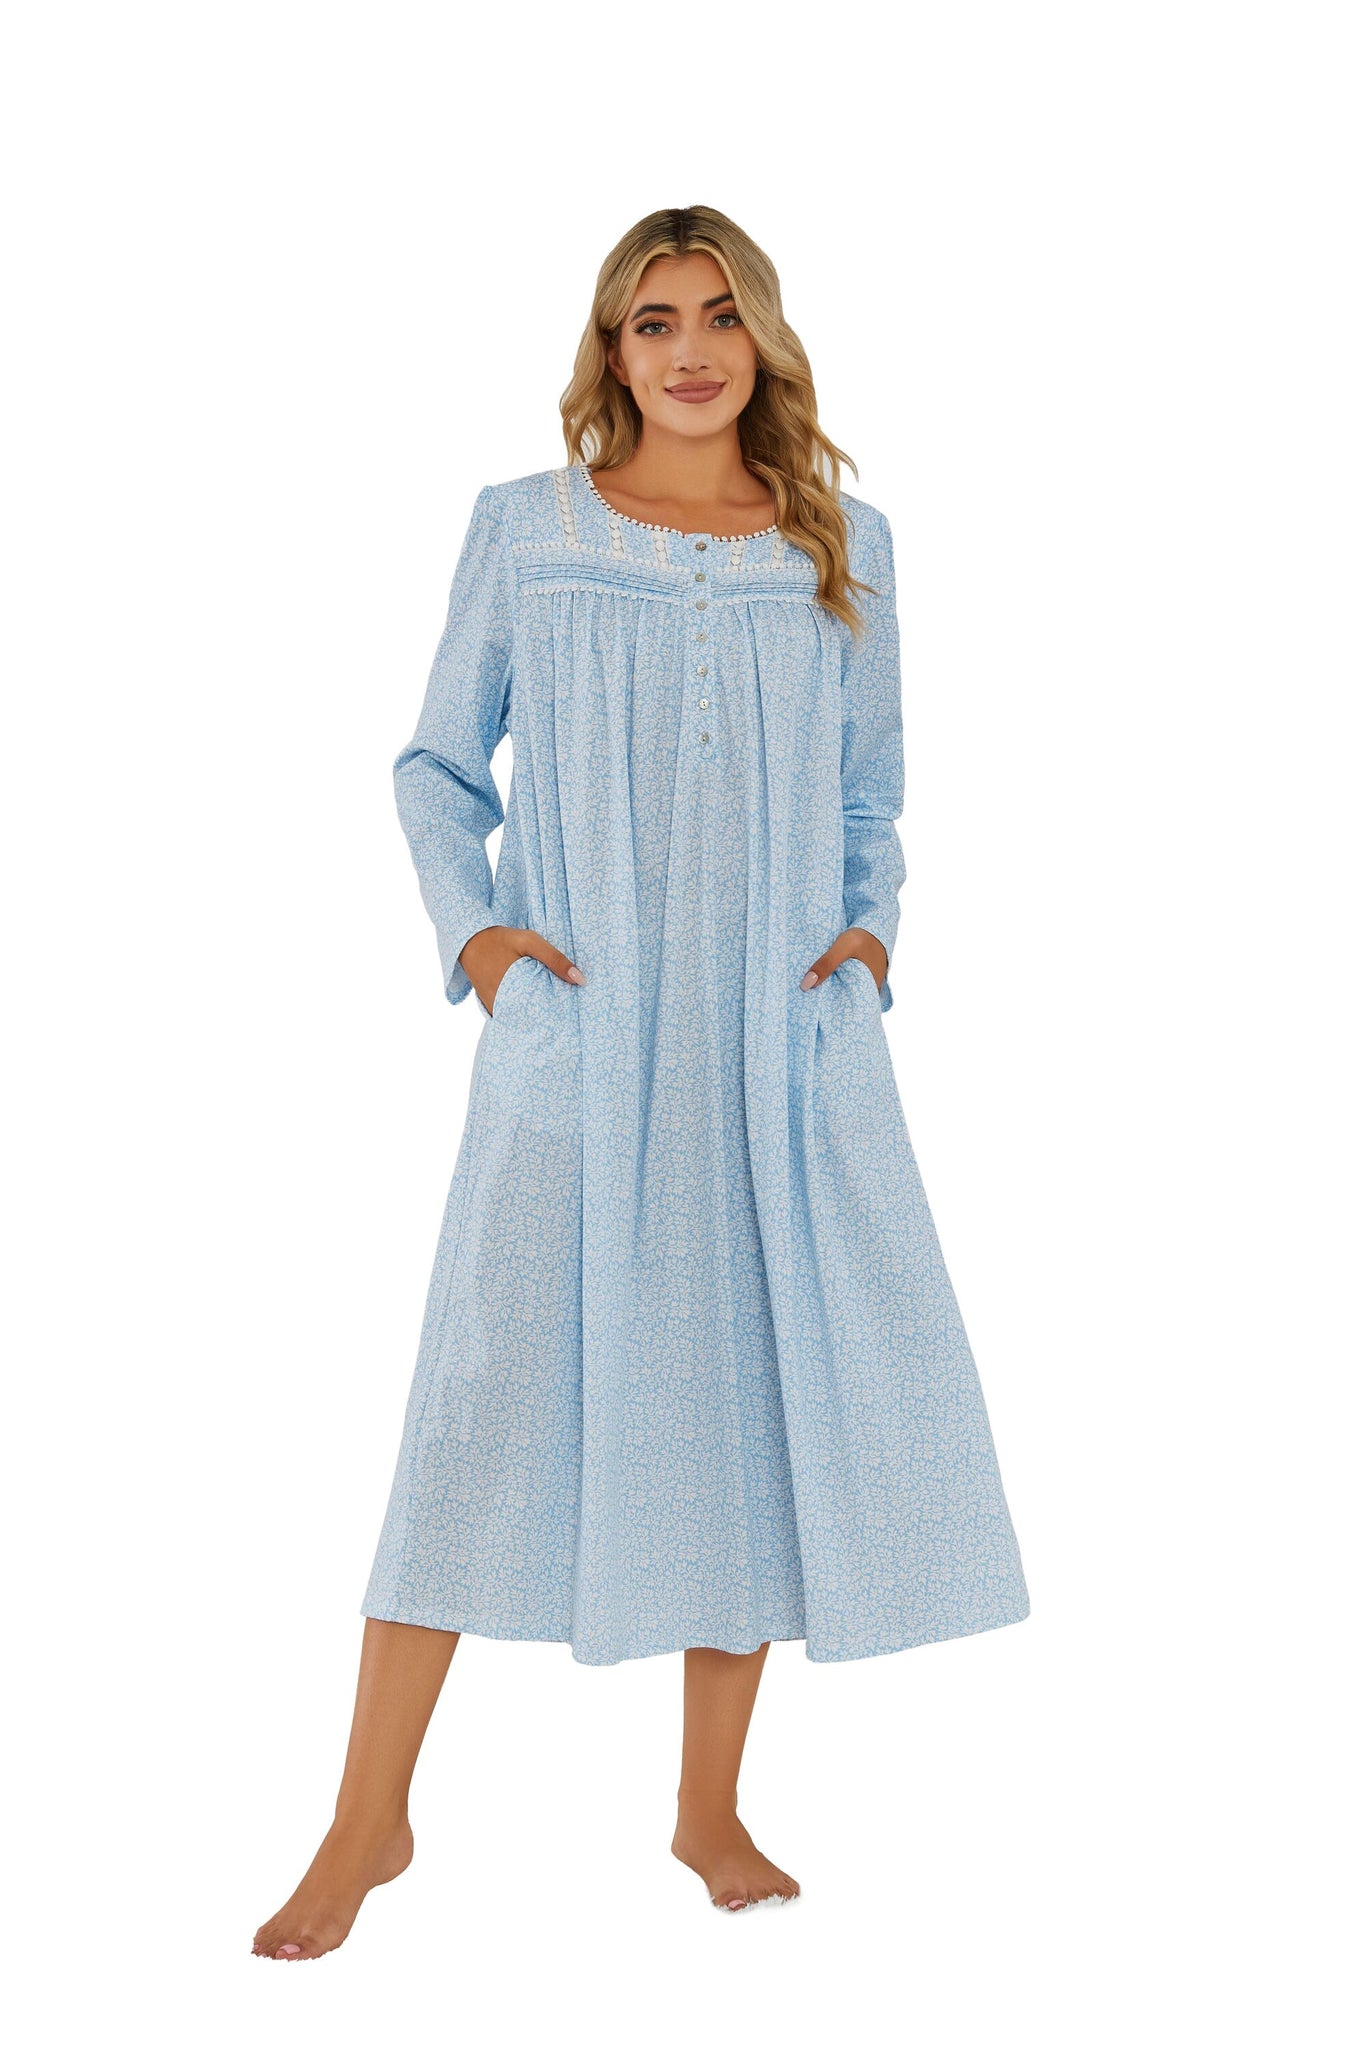 Plus Size Nightgowns for Women Sleeveless Sleepwear Soft Modal Night Pajama  Dress - Walmart.com